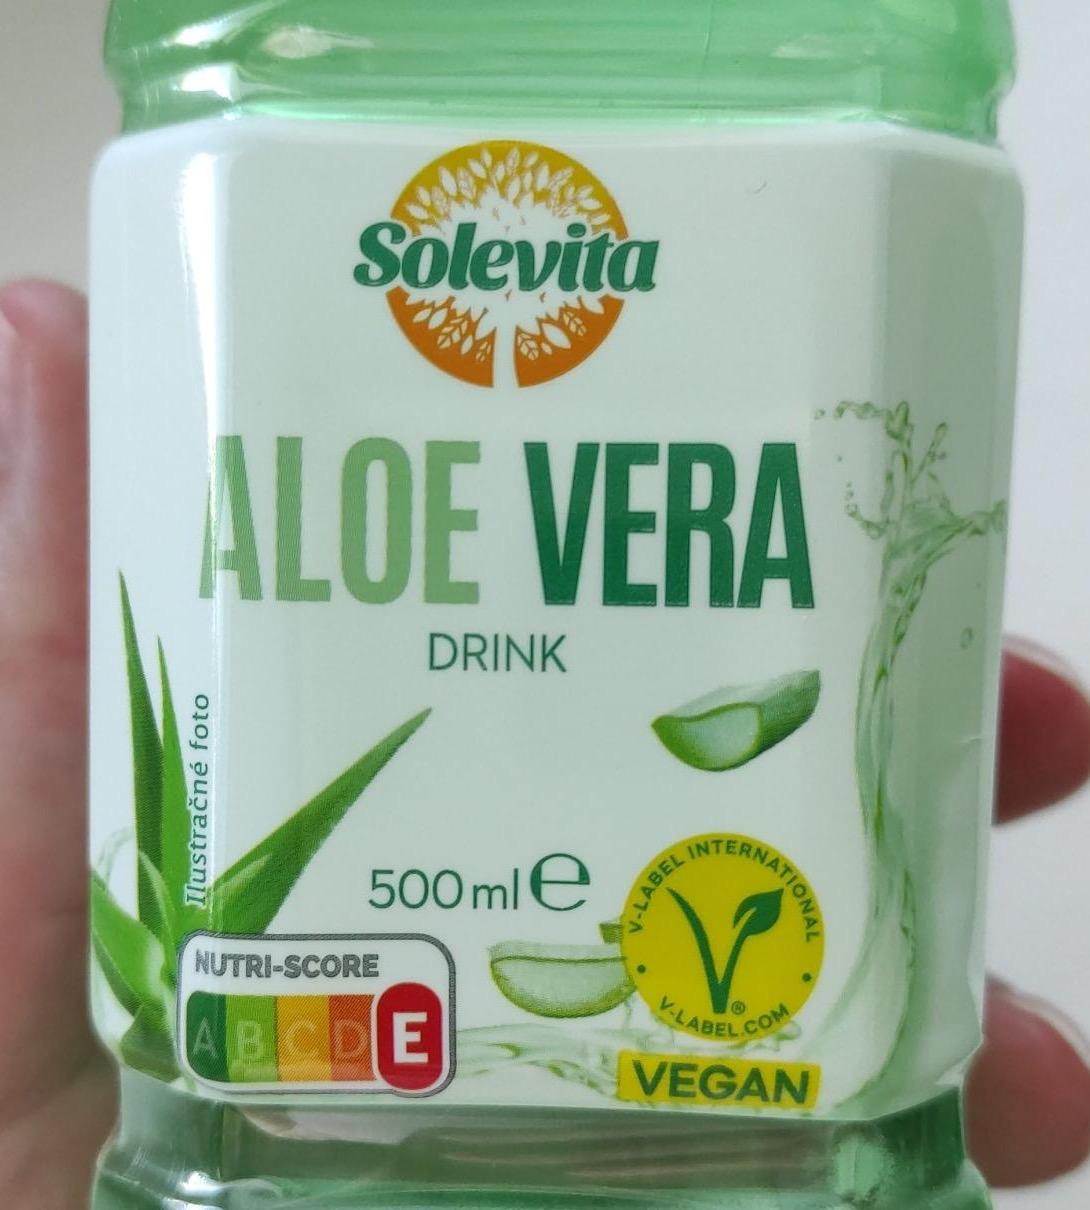 Képek - Aloe Vera drink Solevita